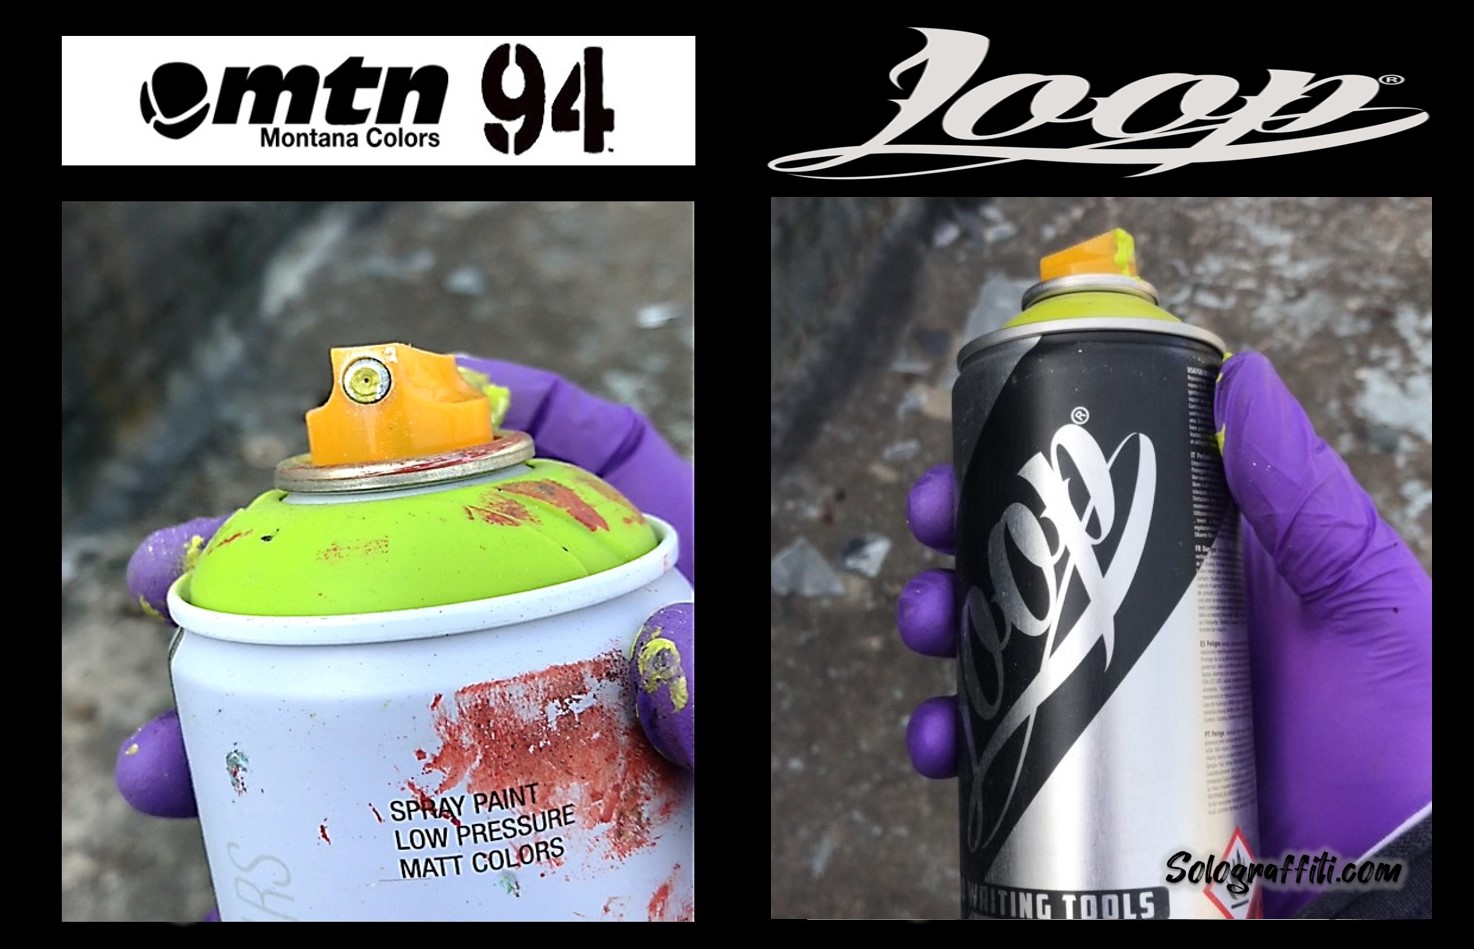 mtn94 vs Loop graffiti spray 